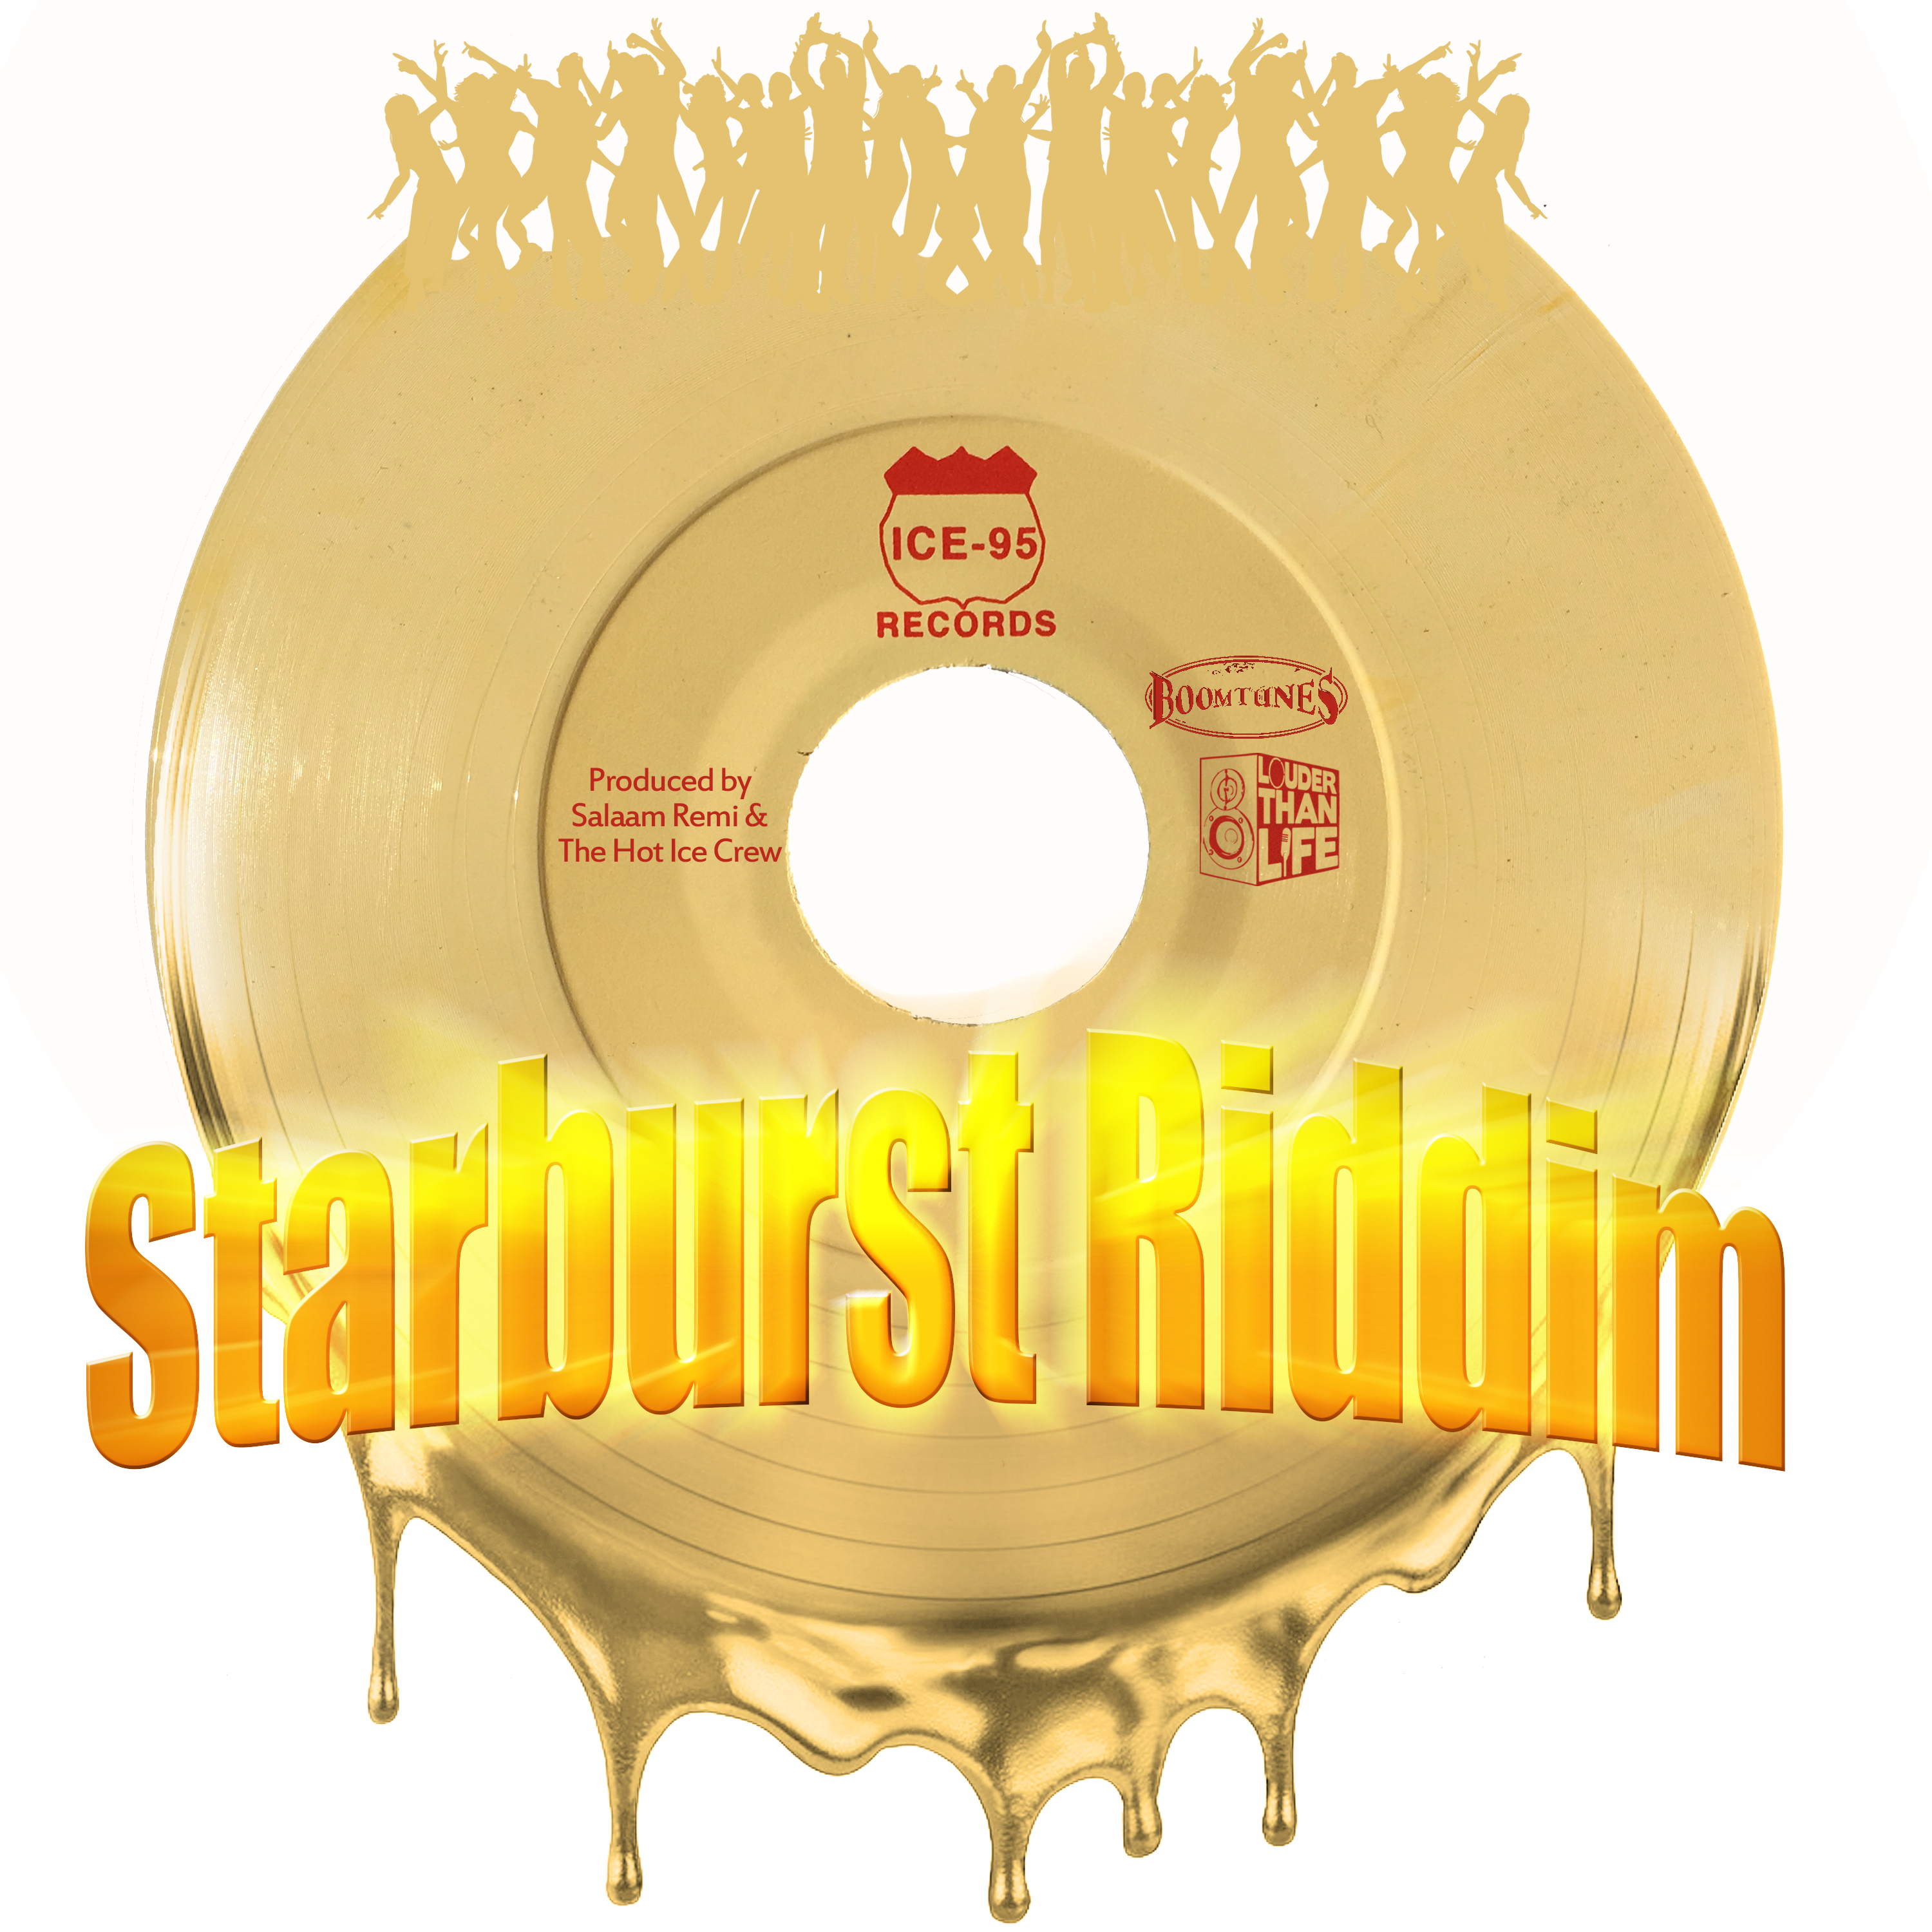 Starburst Riddim